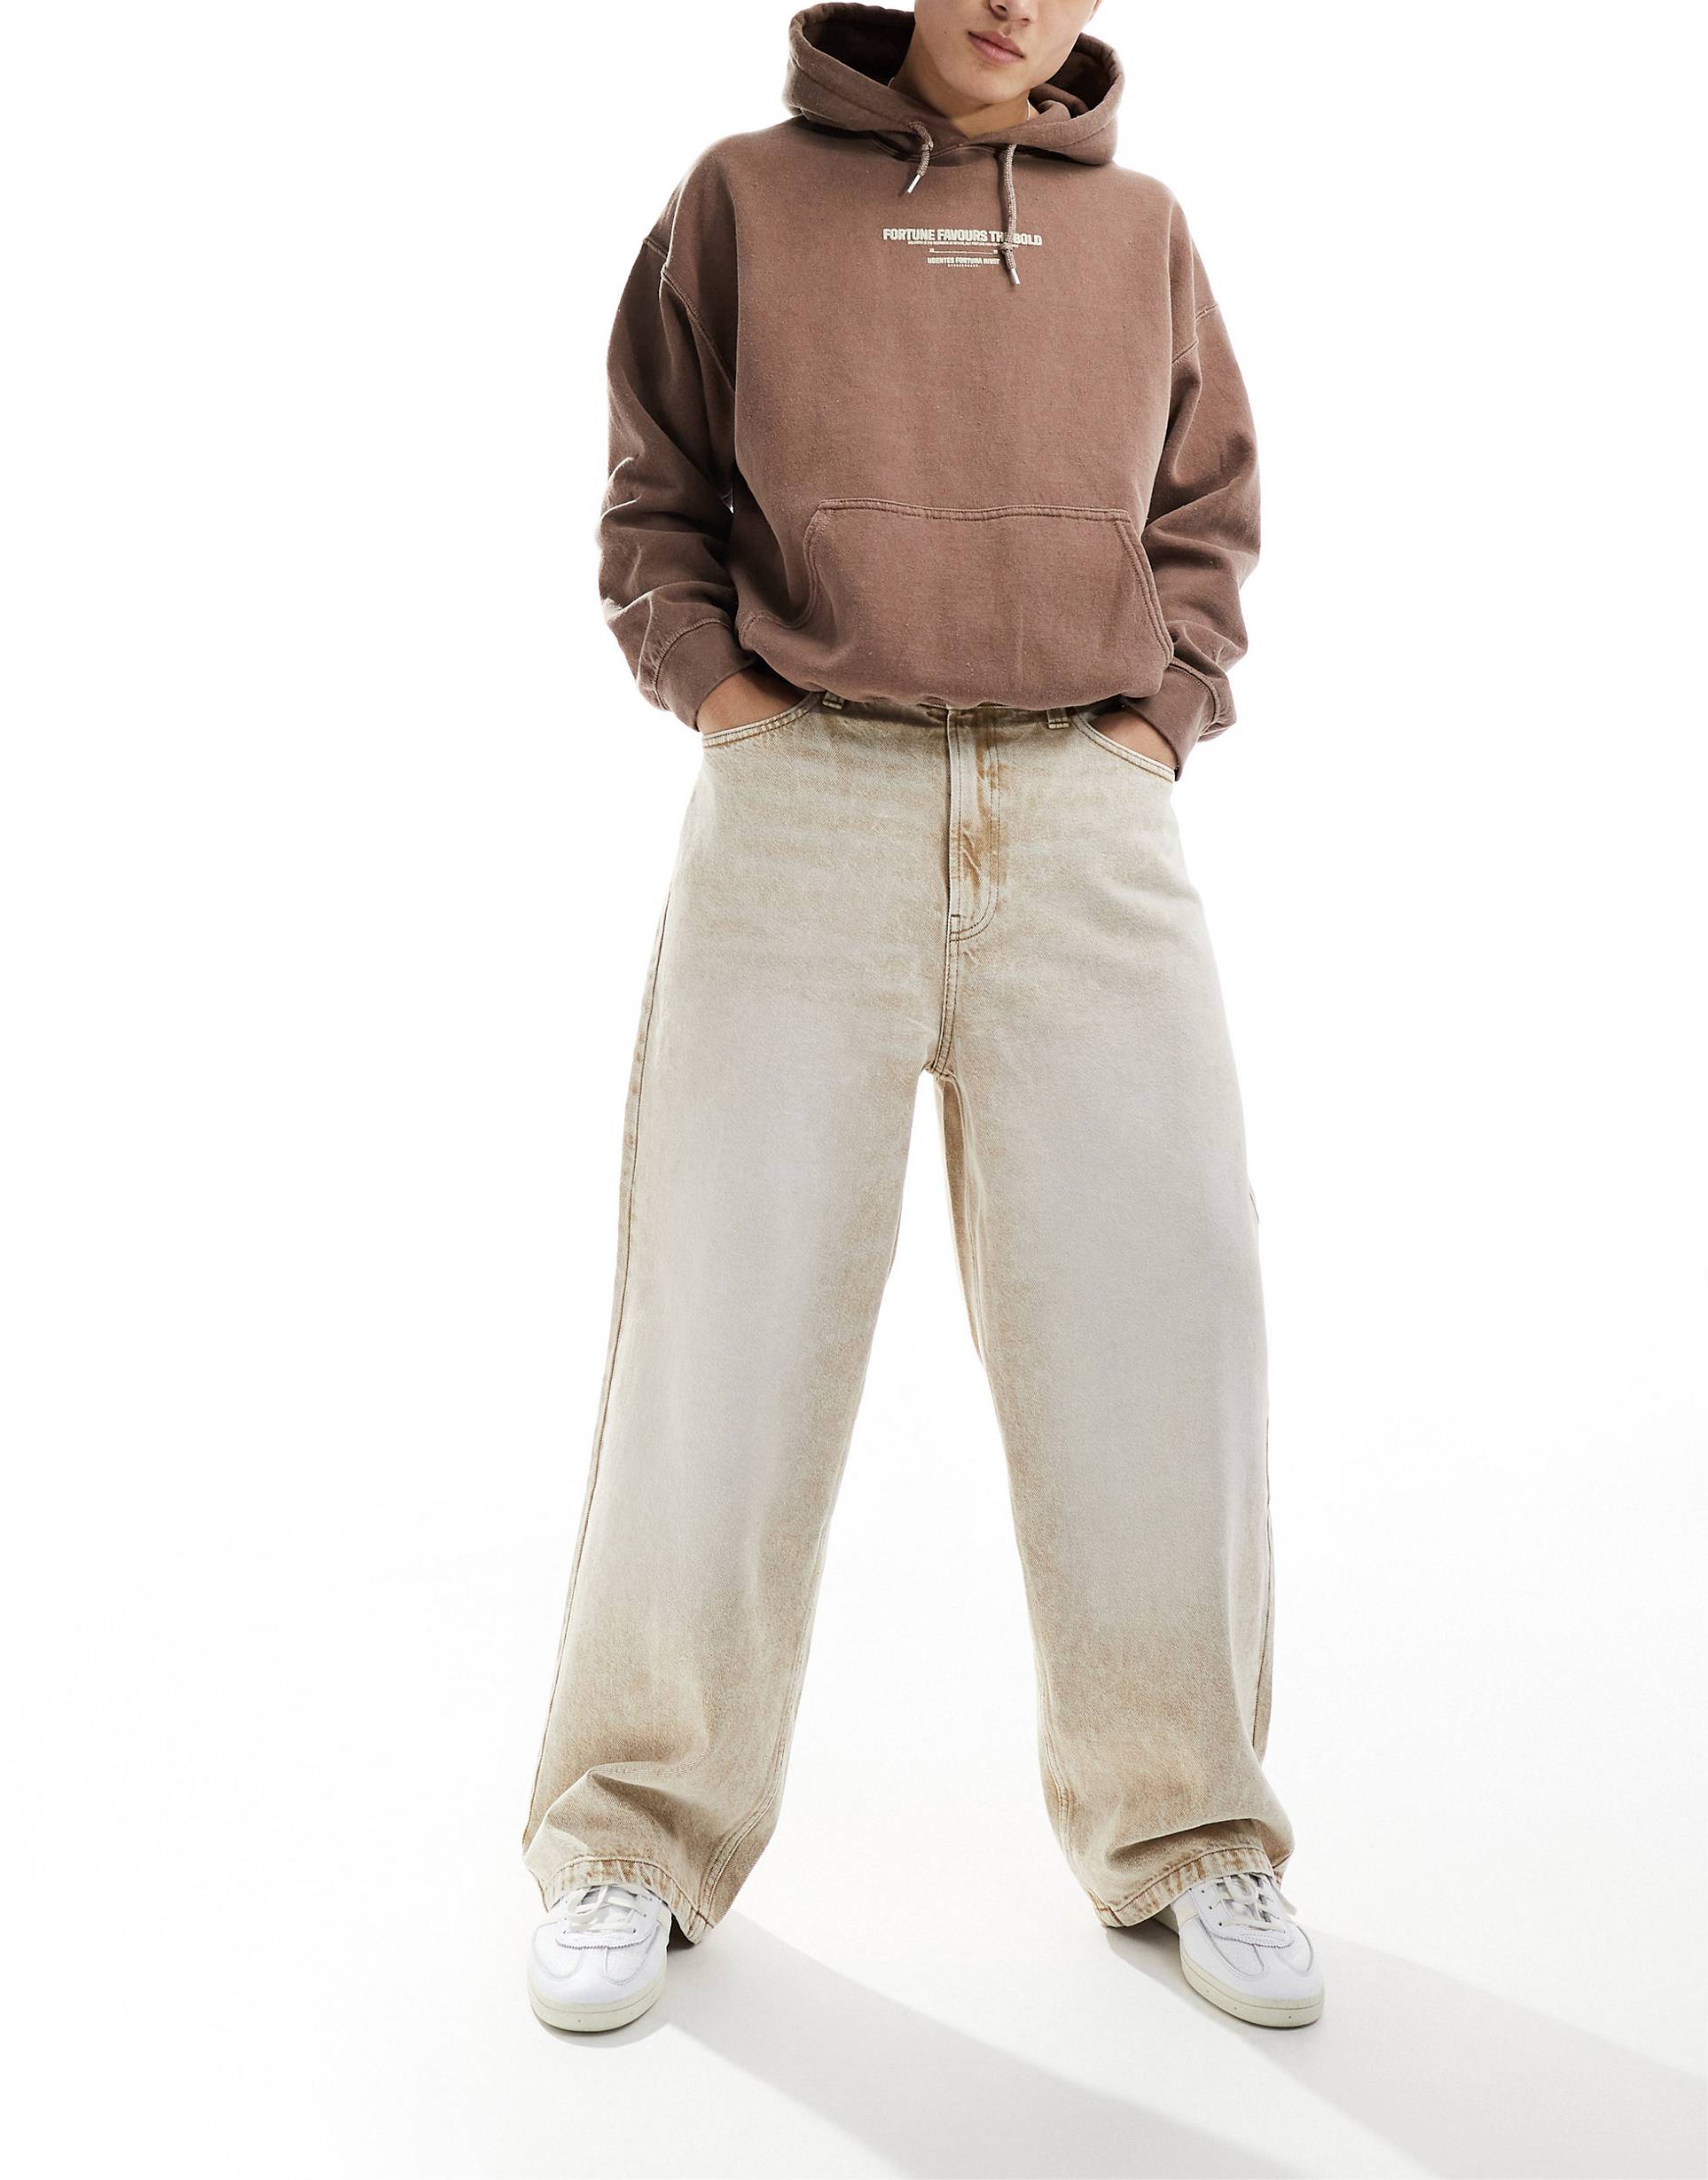 Джинсы Bershka Skater Fit Casted, бежевый джинсы bershka светлые 38 размер